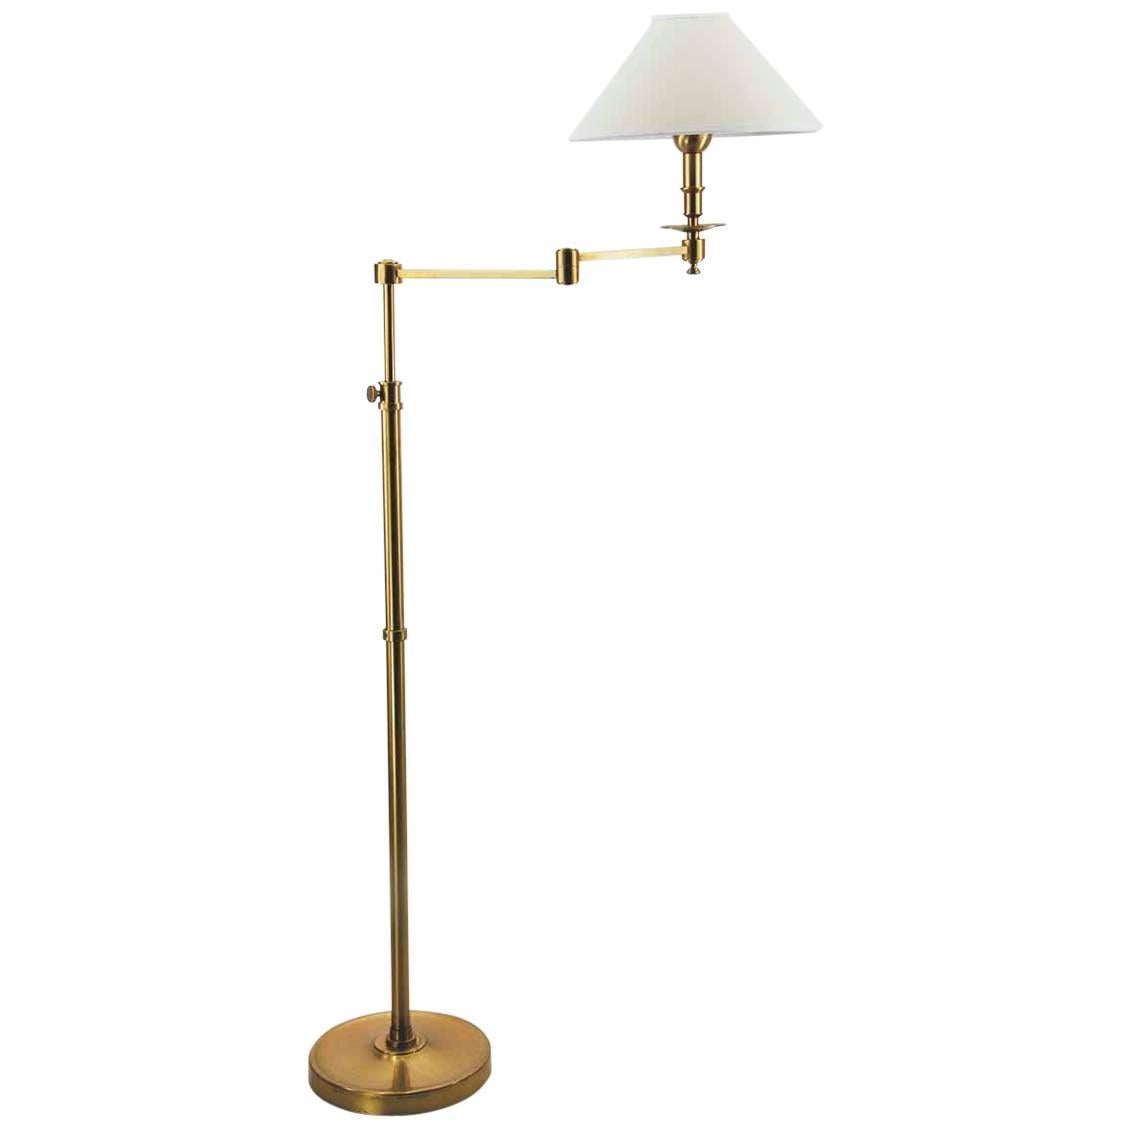 Floor Lamp with Ajustable Arm in Brass, Midcentury Modern